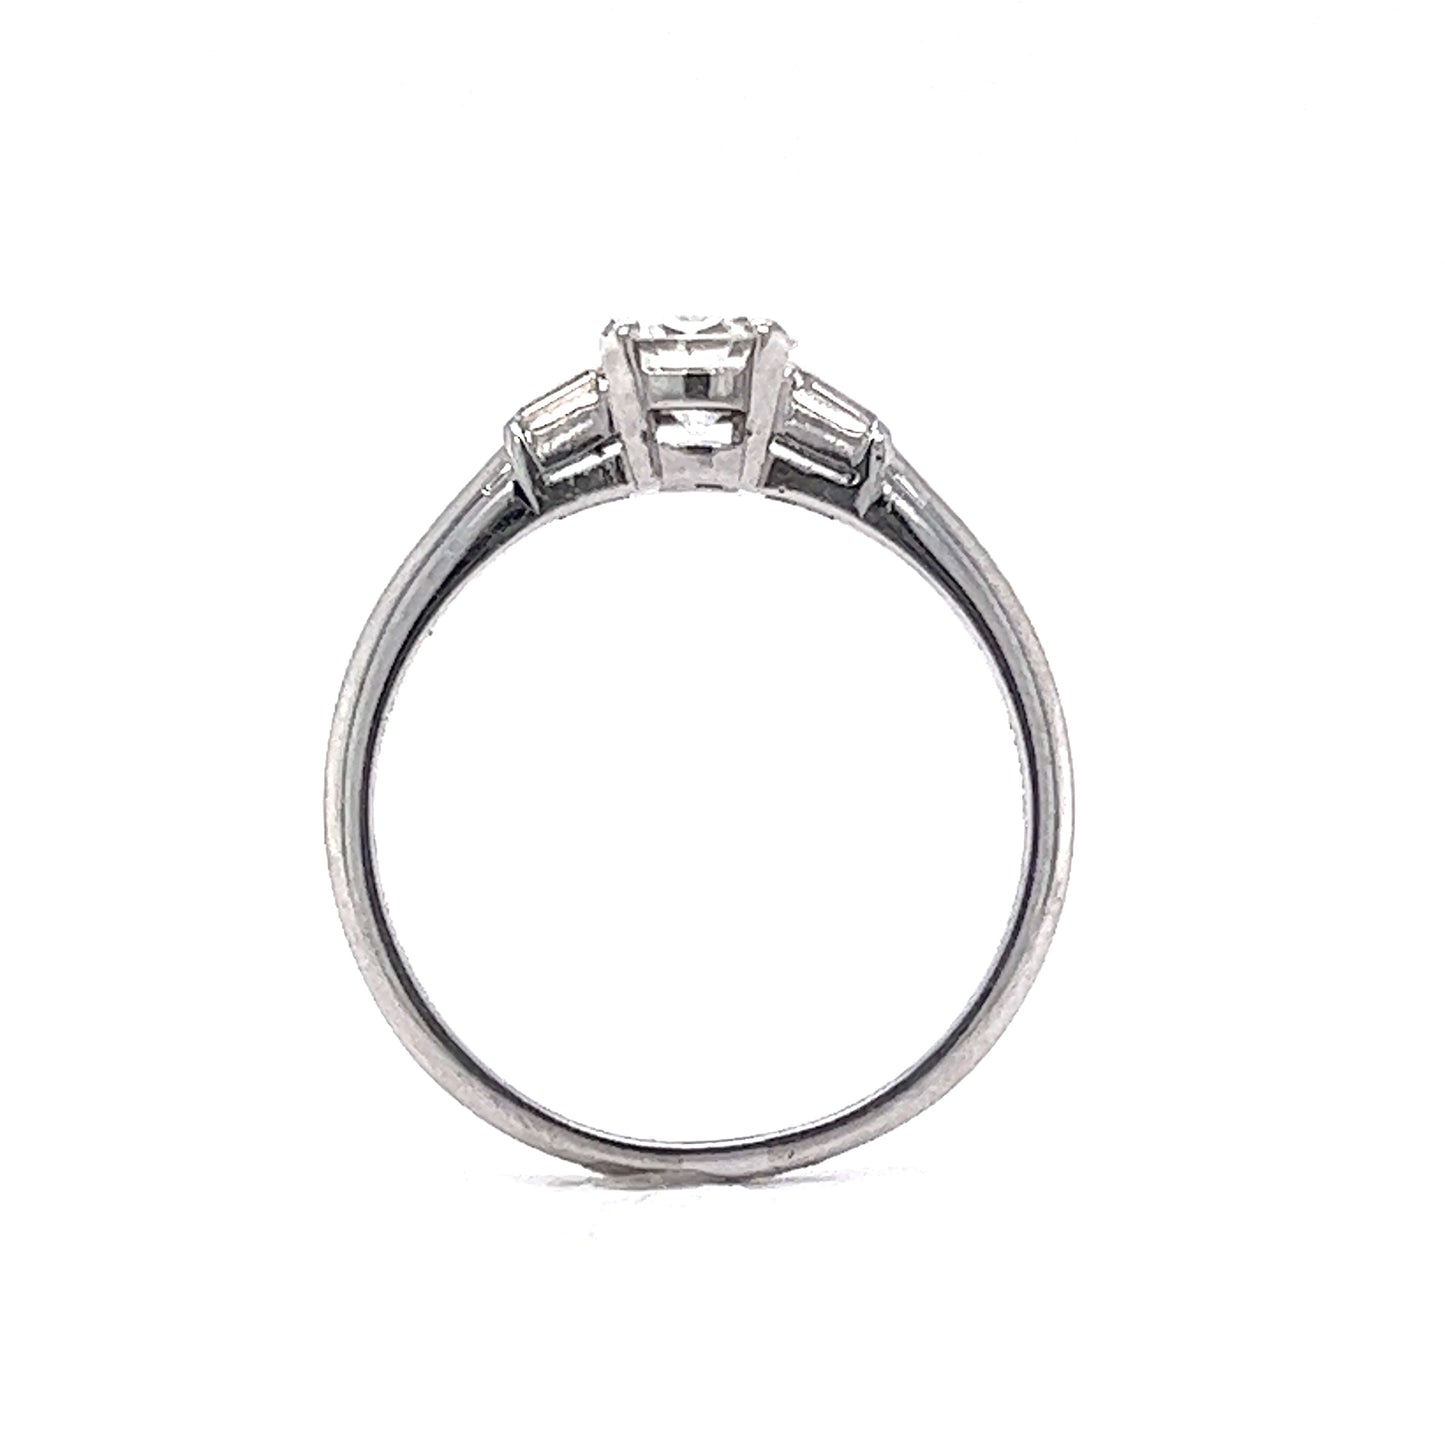 Vintage 1930's Raymond Yard Diamond Engagement Ring in Platinum